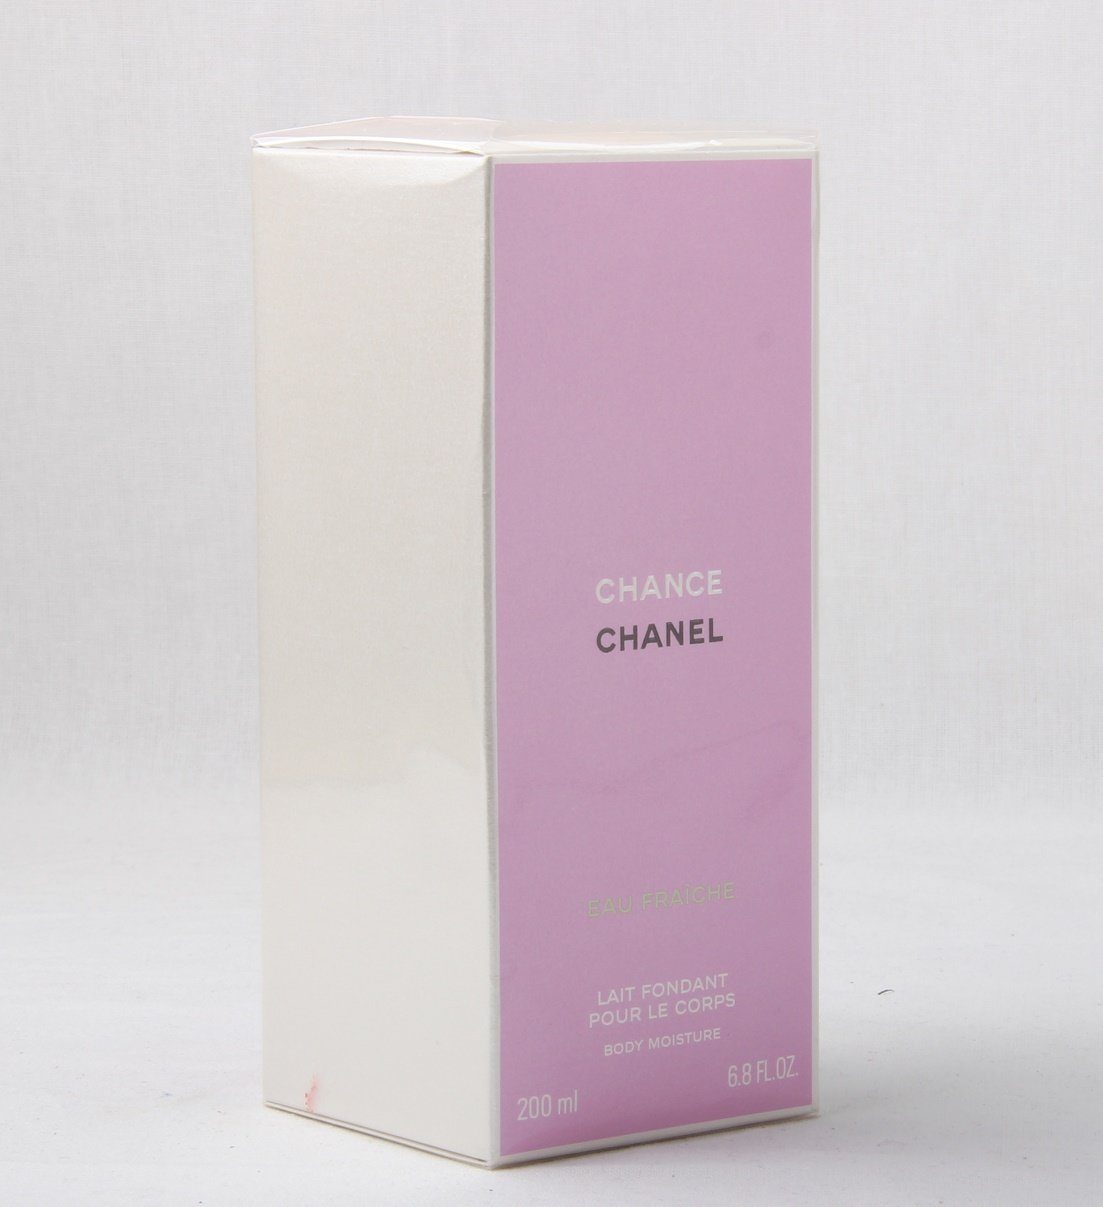 NEW CHANEL Chance Eau Fraiche 6.8 fl oz Body Moisture Lotion lait fondant  200mL